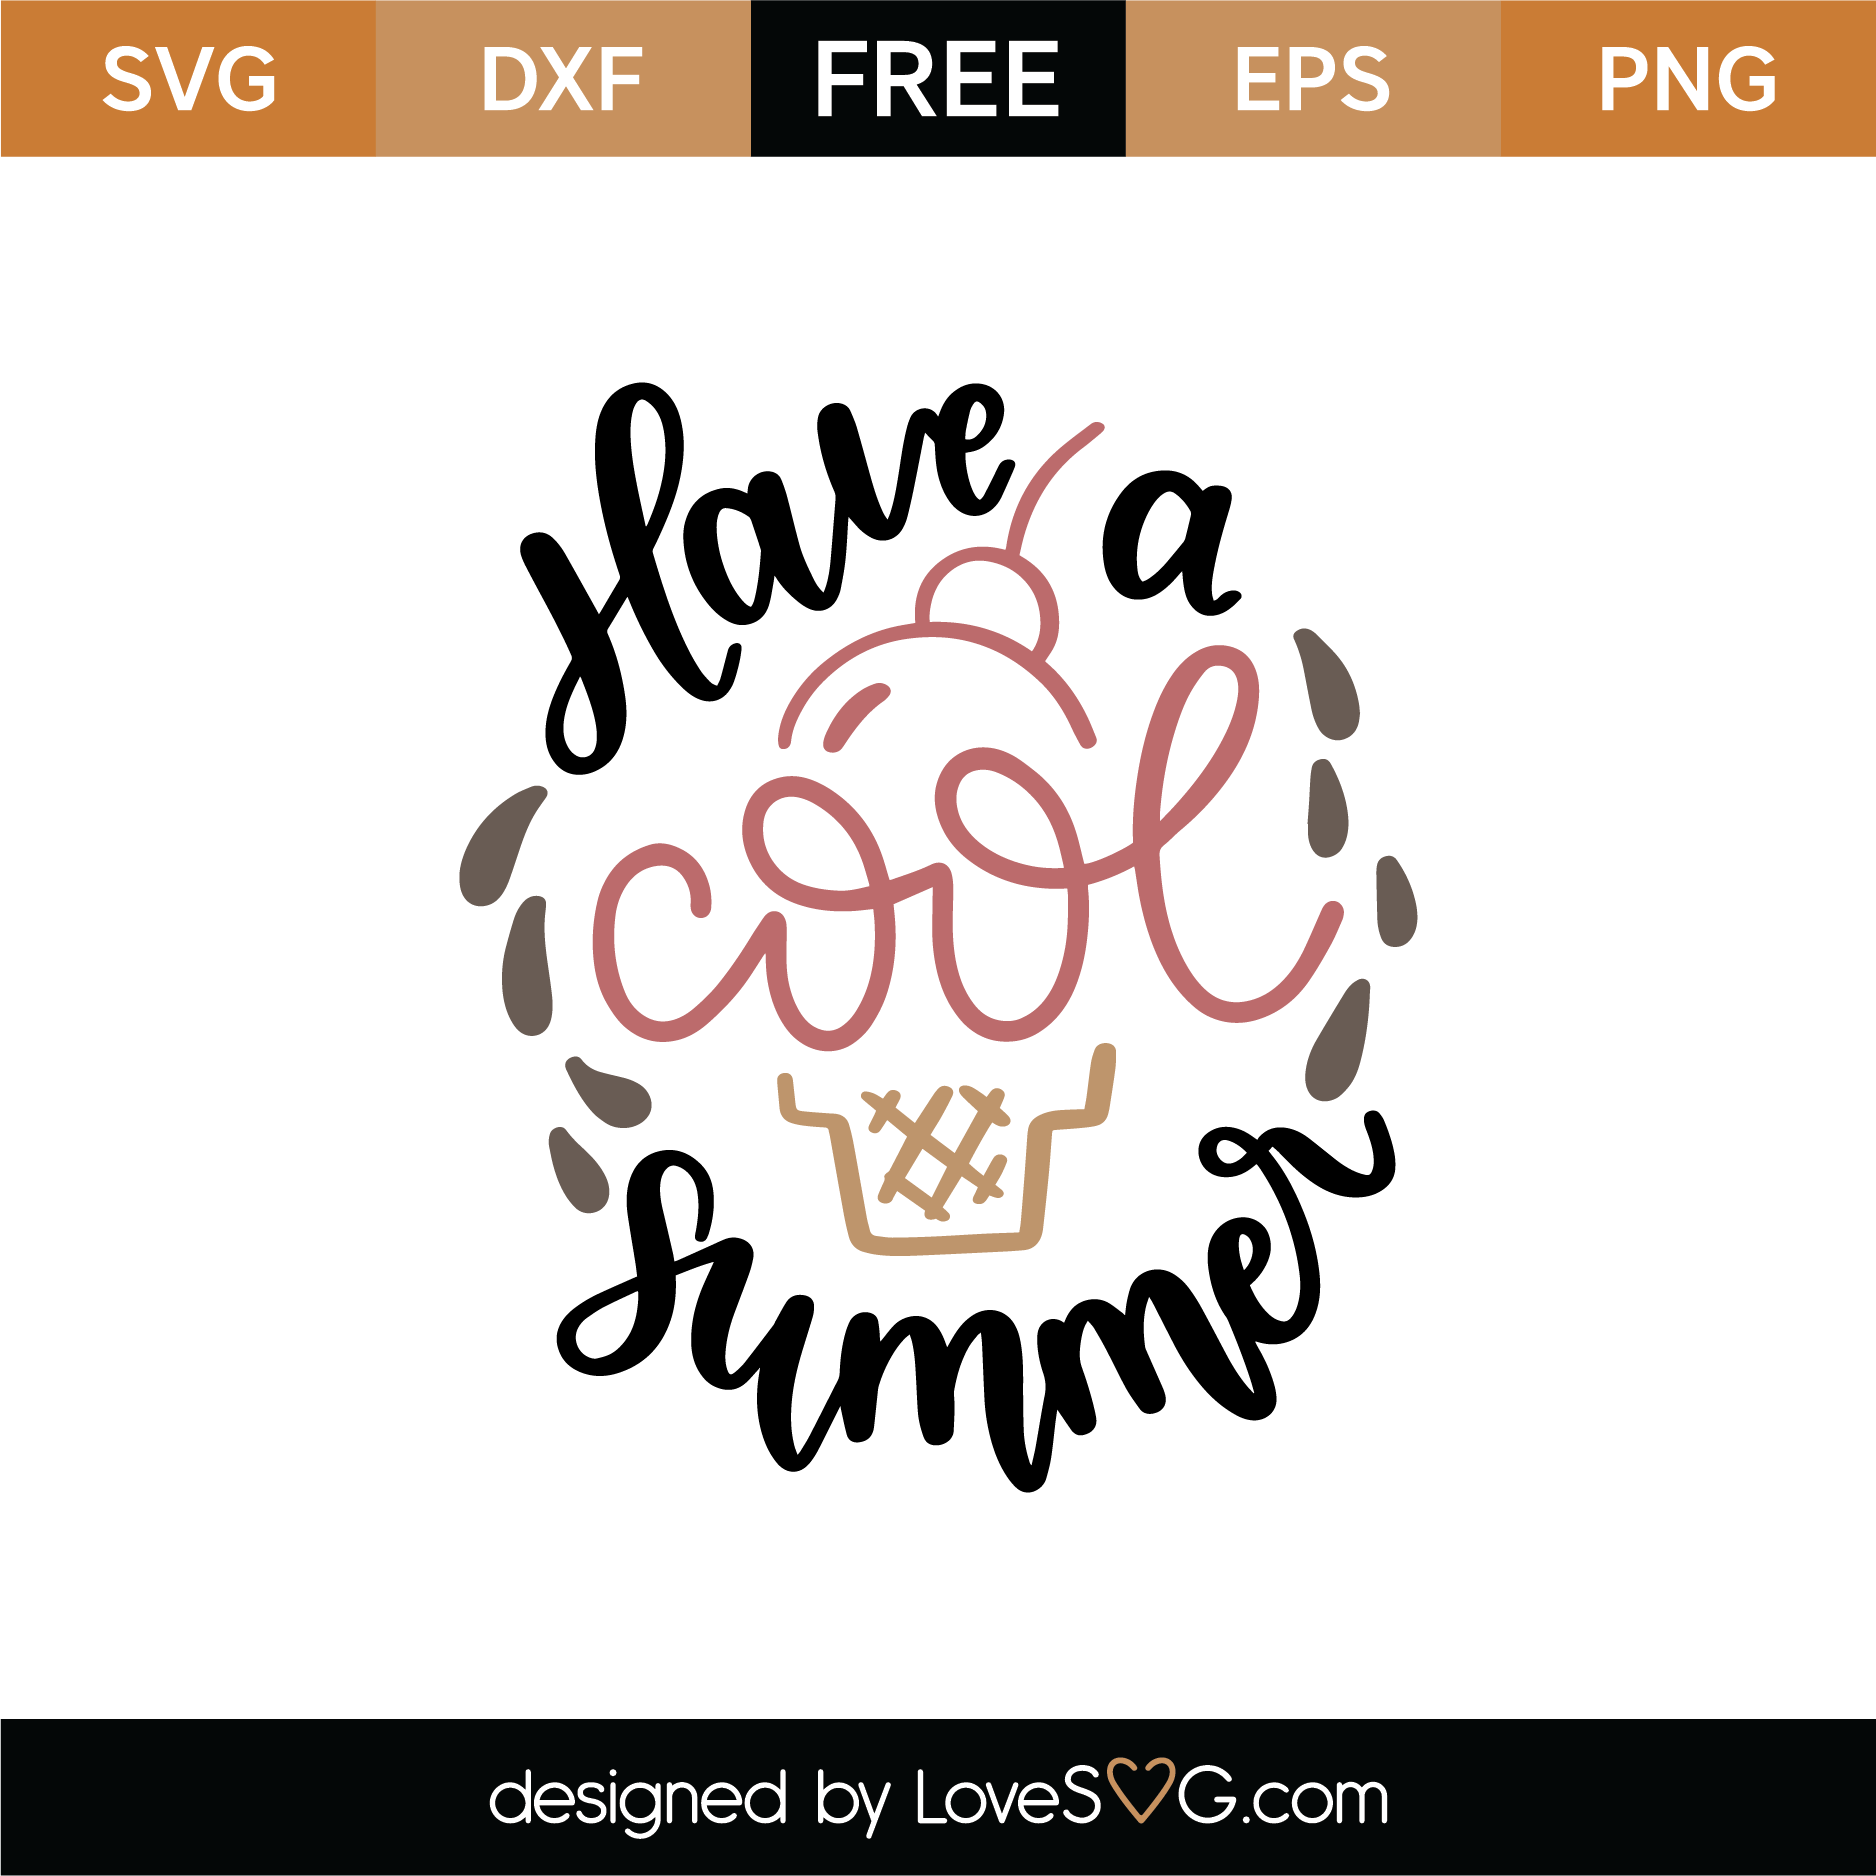 Download Free Have A Cool Summer SVG Cut File | Lovesvg.com